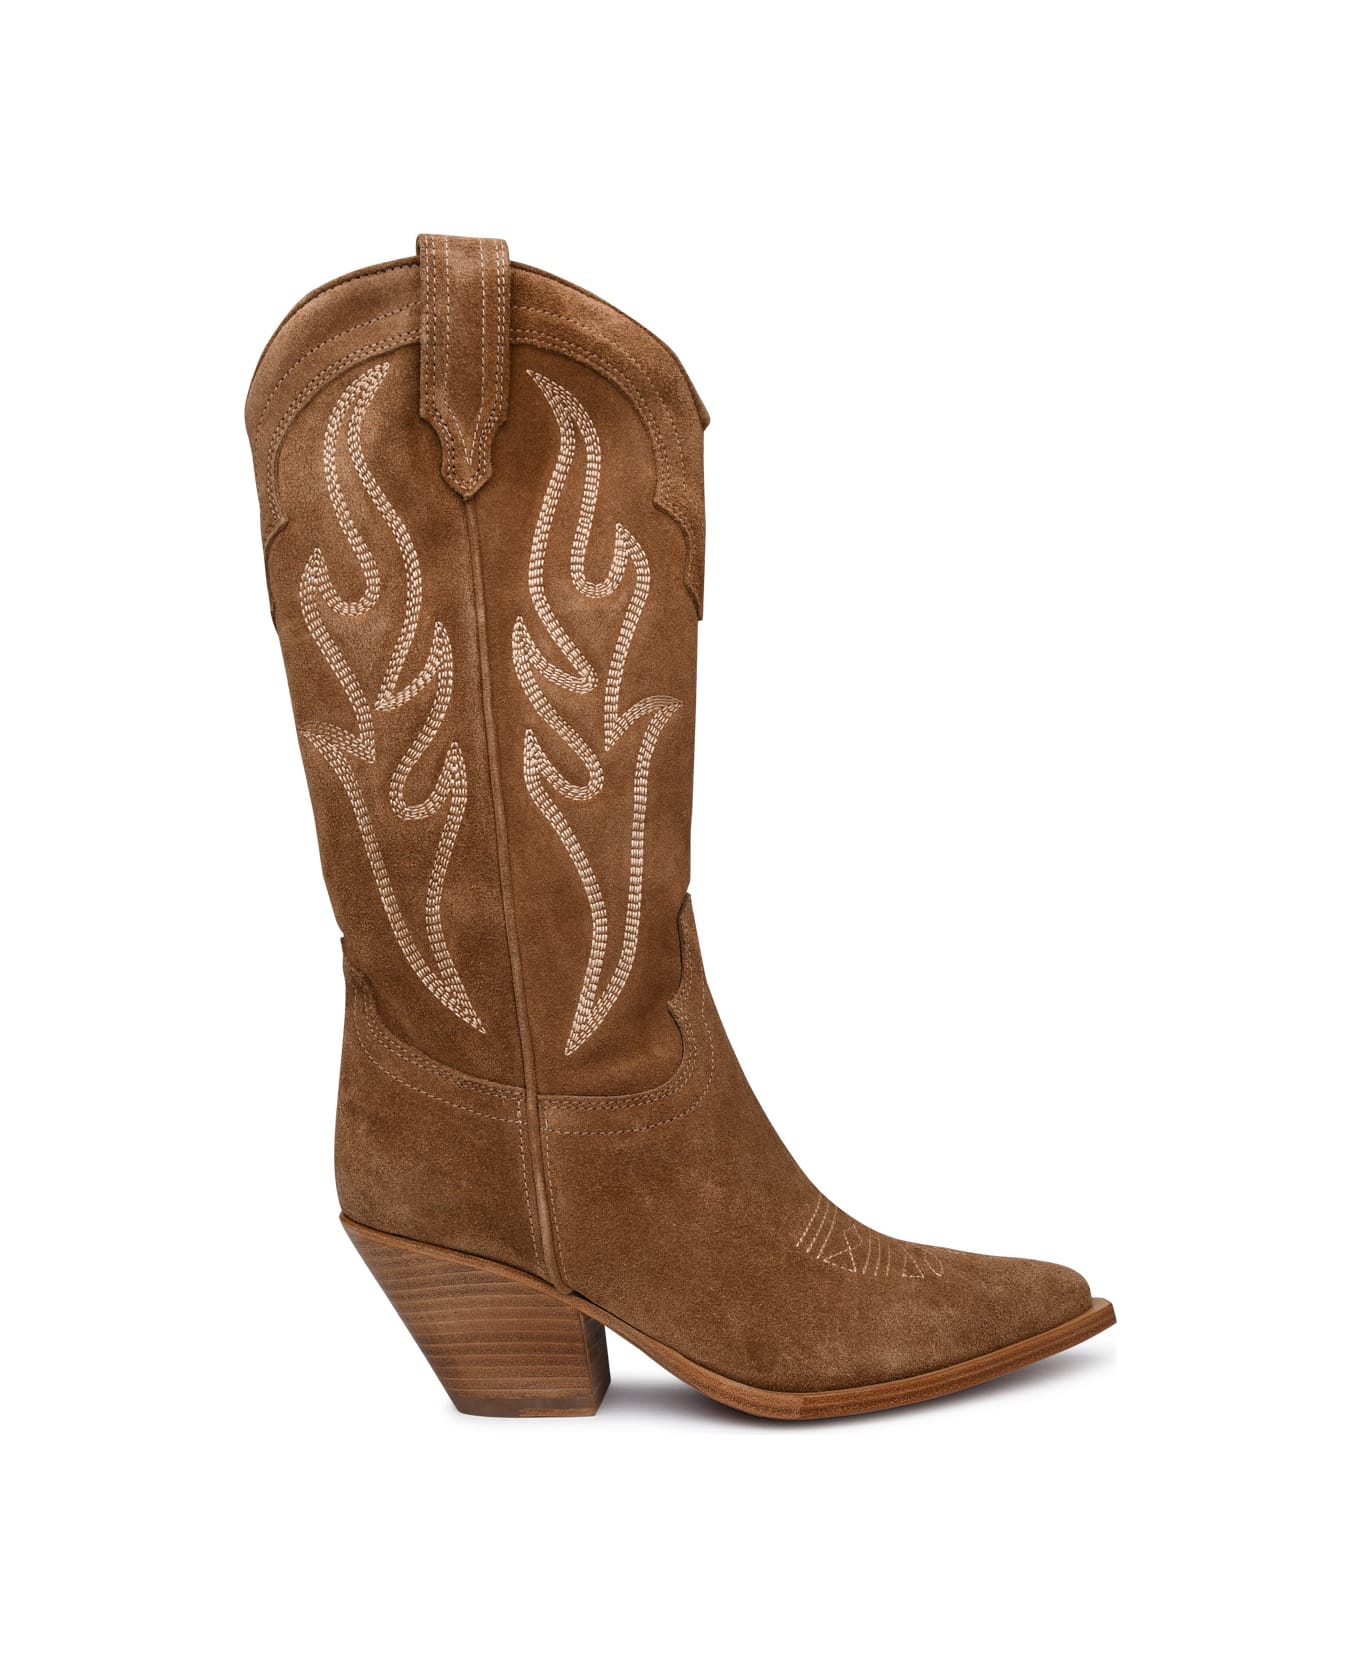 Sonora Santa Fe Beige Suede Boots - Brown ブーツ